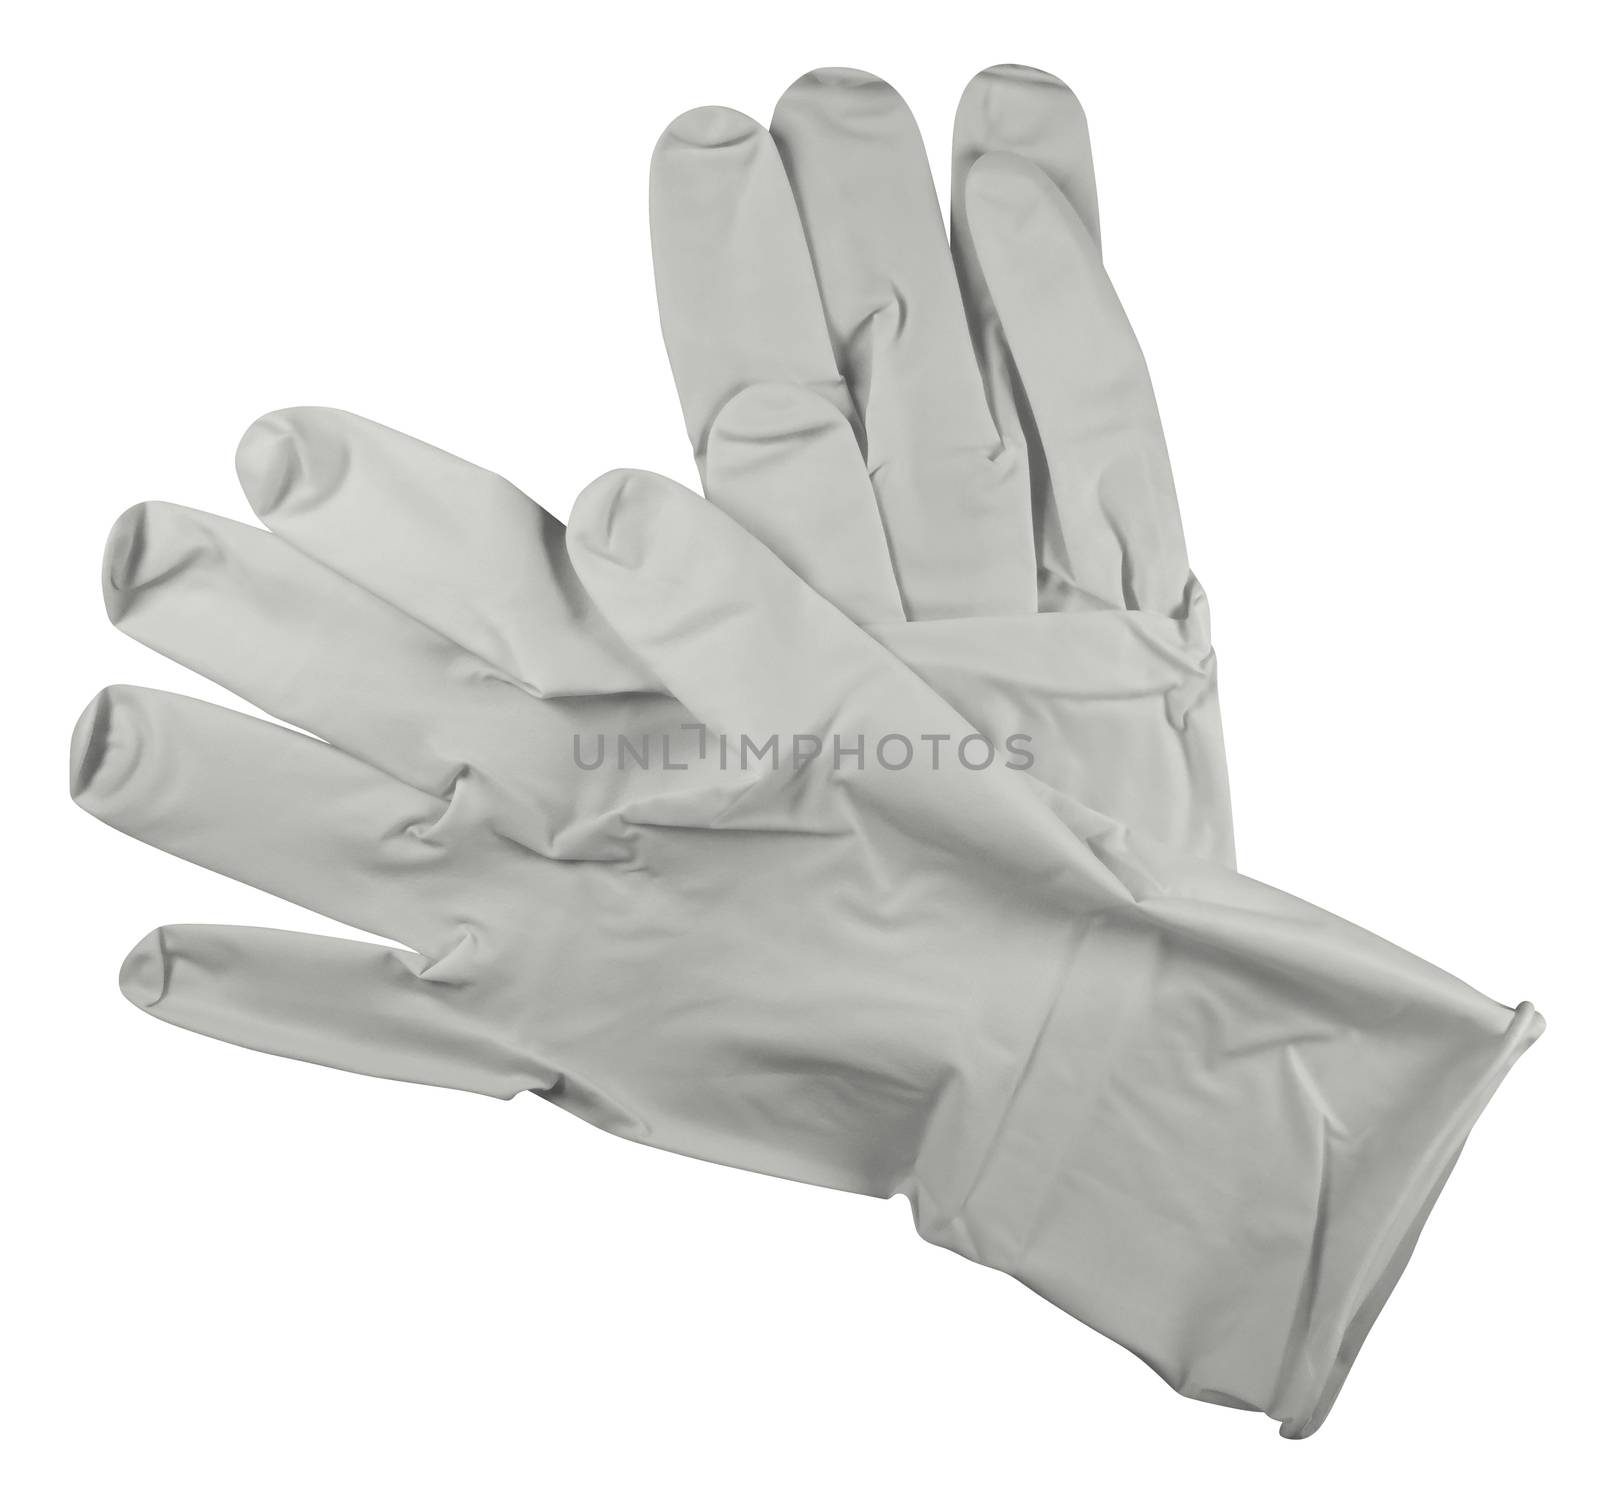 Pair of medical rubber gloves by Venakr